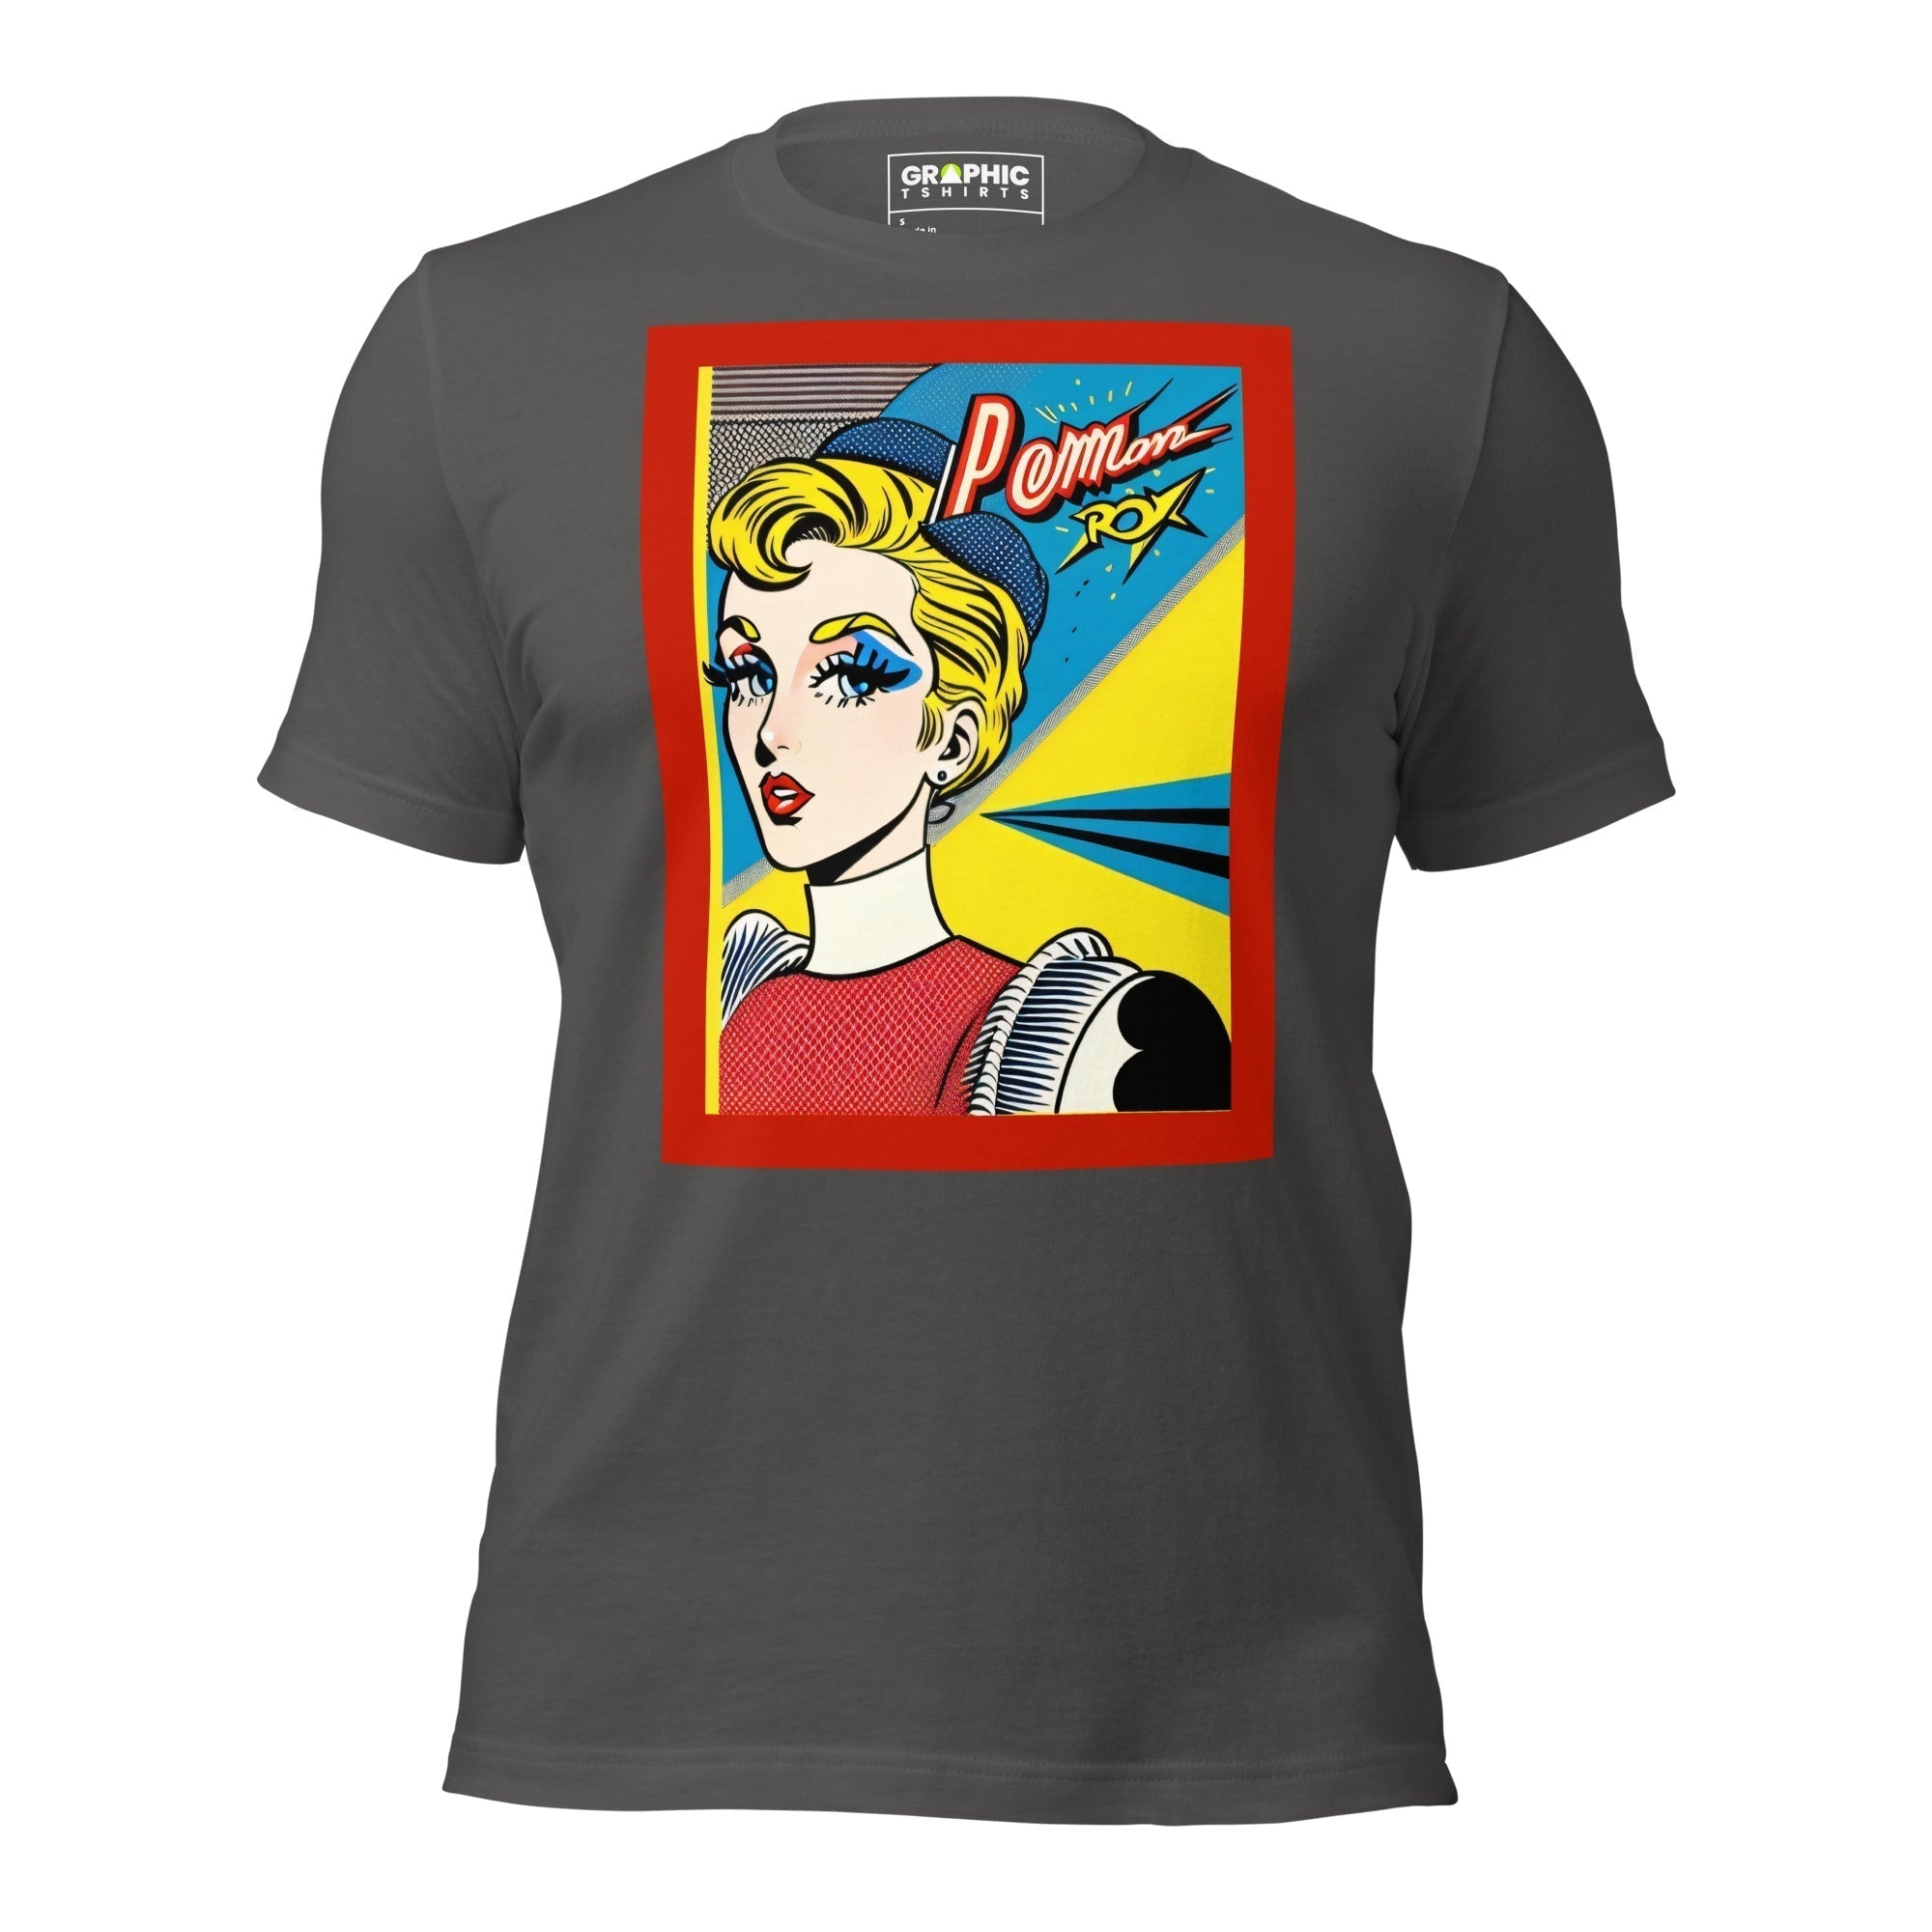 Unisex Crew Neck T-Shirt - Vintage American Comic Series v.25 - GRAPHIC T-SHIRTS